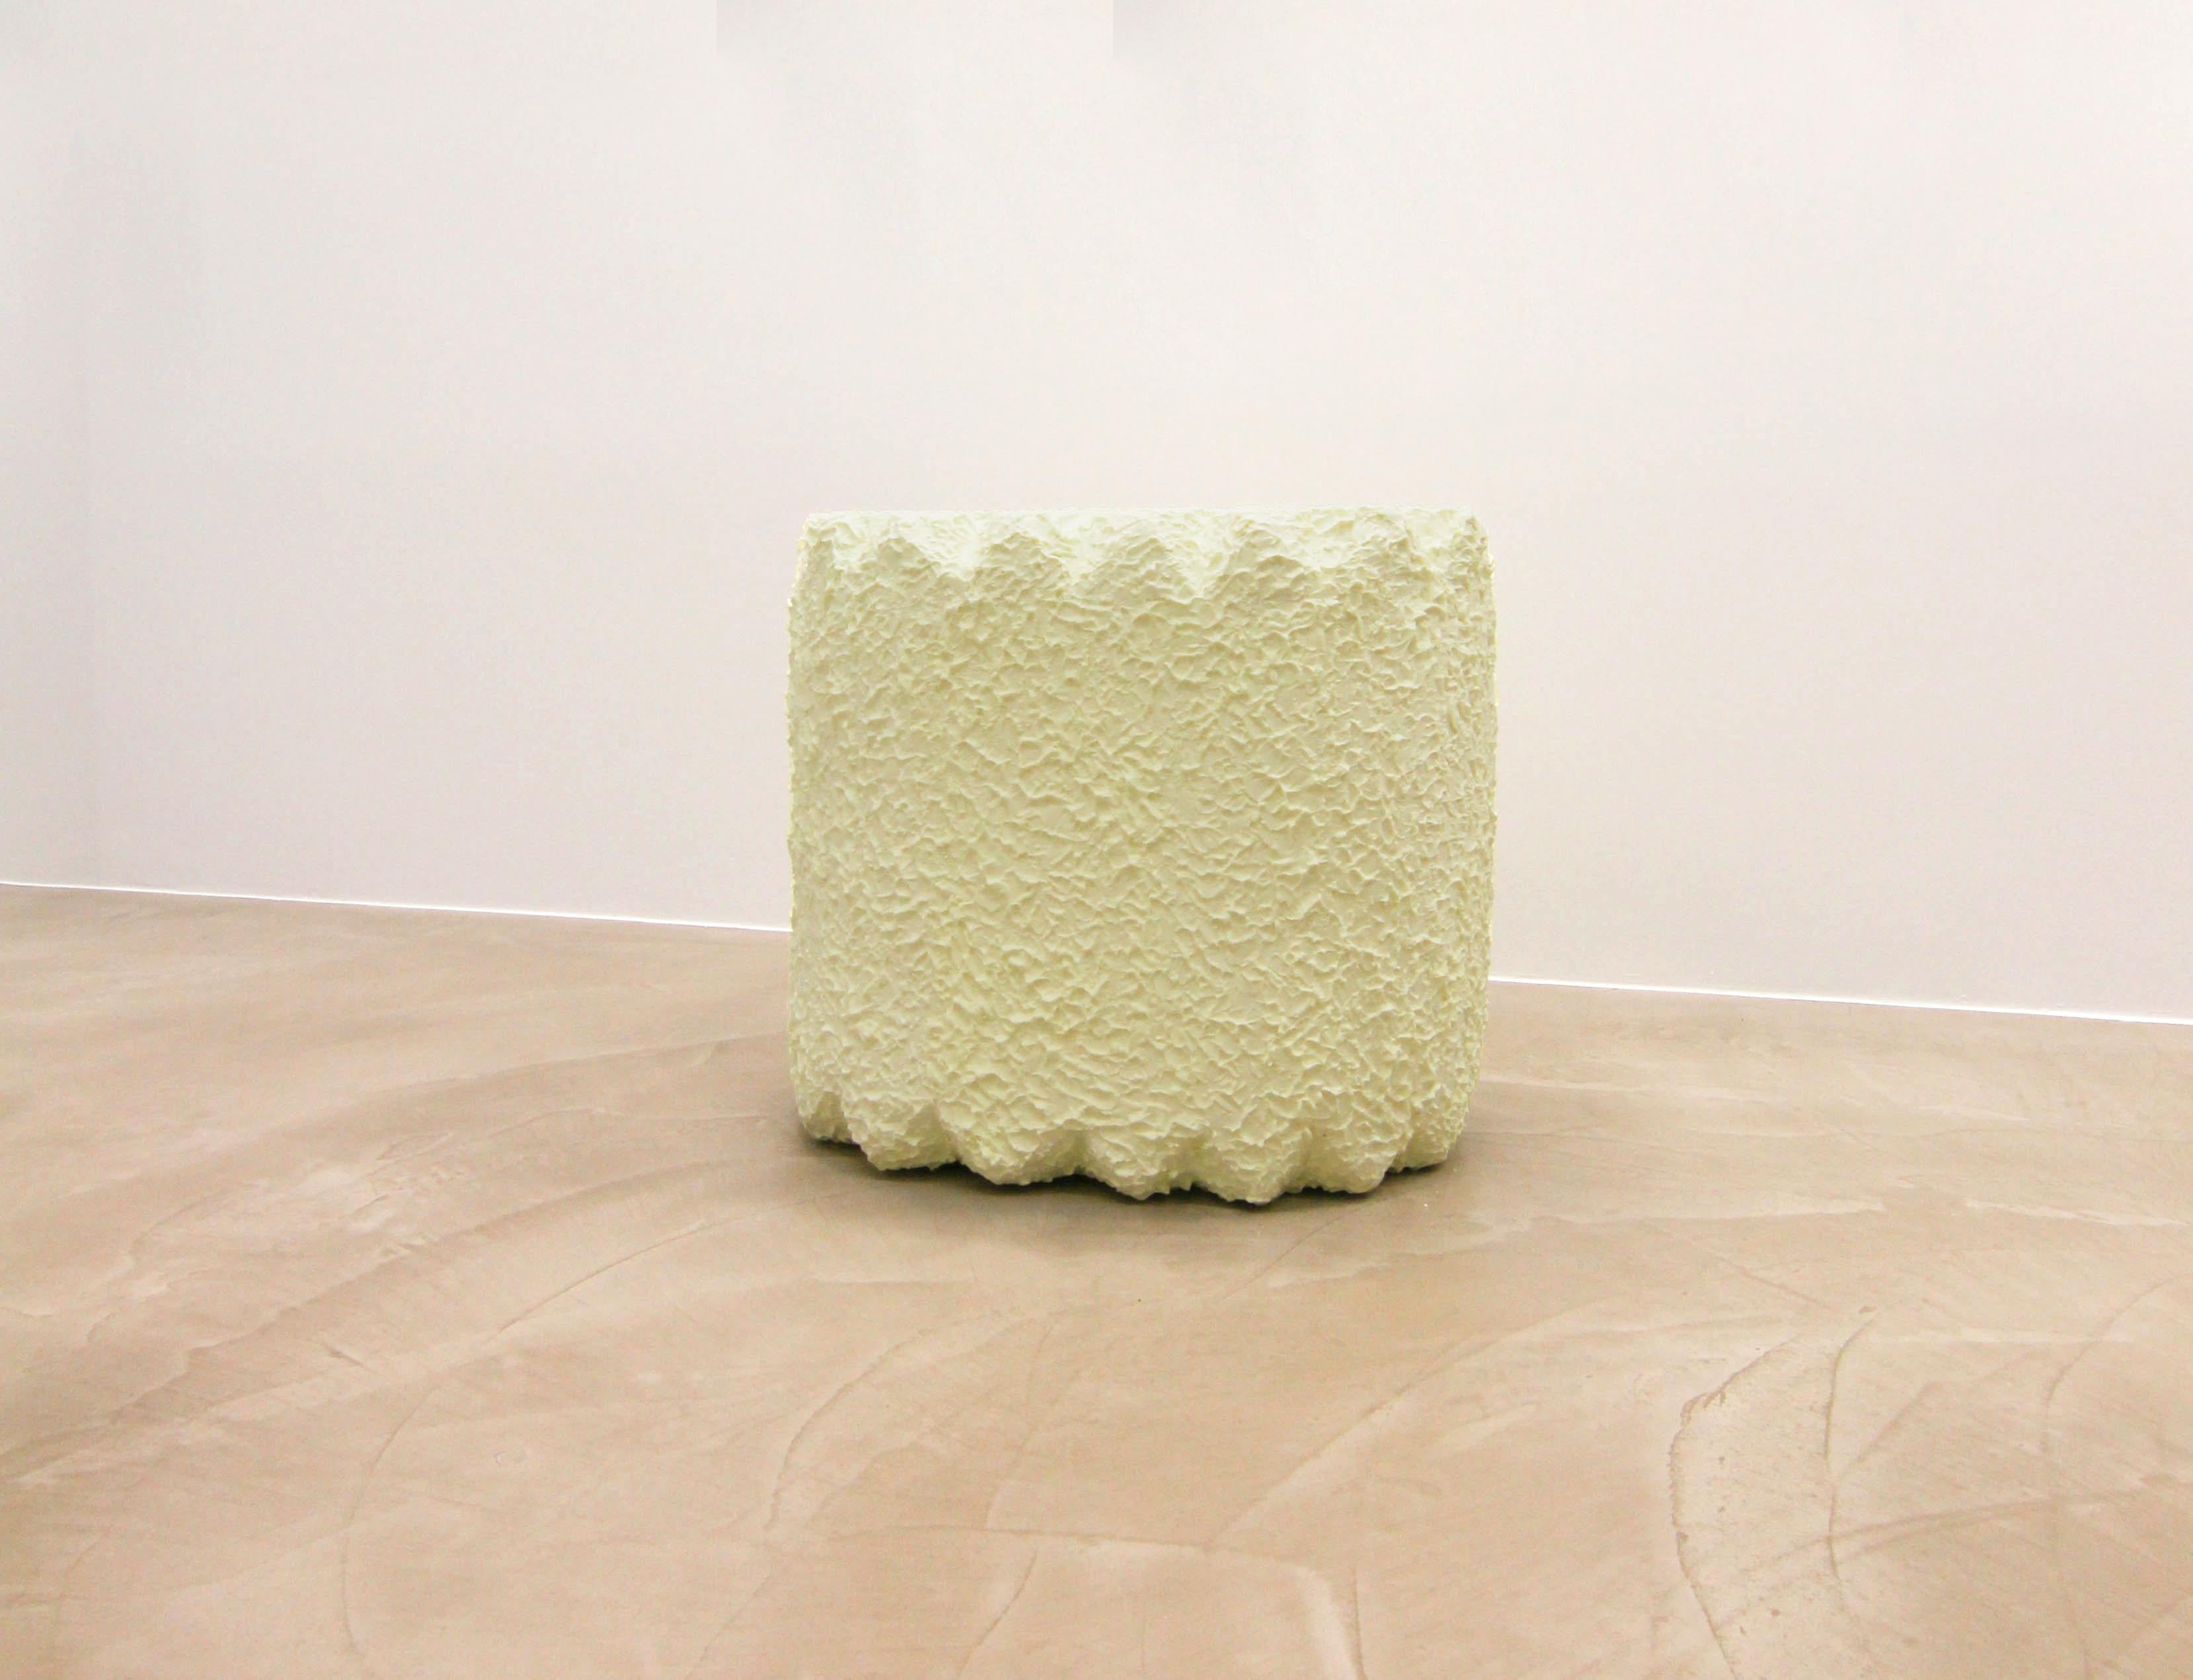 Sun cake table by BehaghelFoiny Design
2020
Materials: Polystyrene, plaster
Dimensions: 53 x 57 x 40 cm.